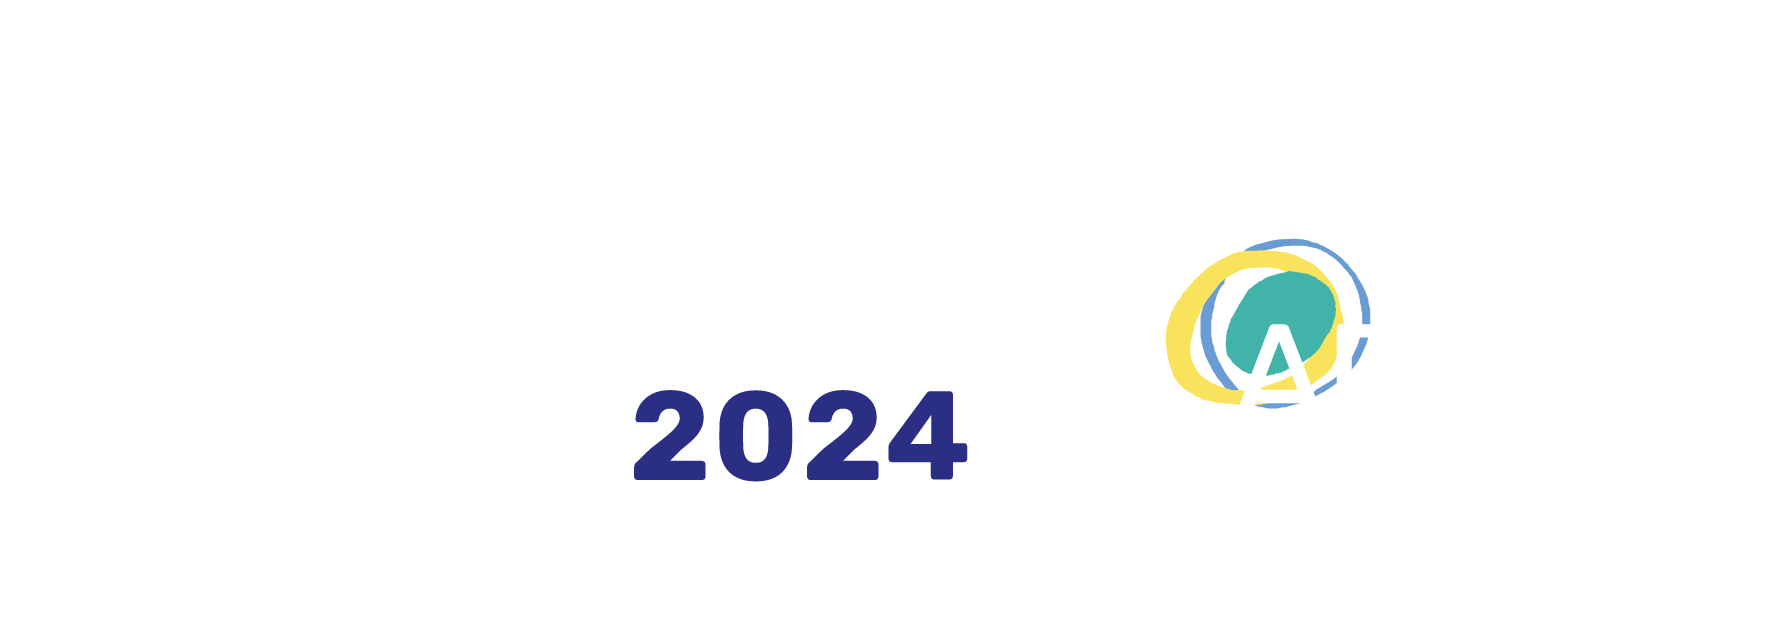 Entering a New Epoch of ART in 2024